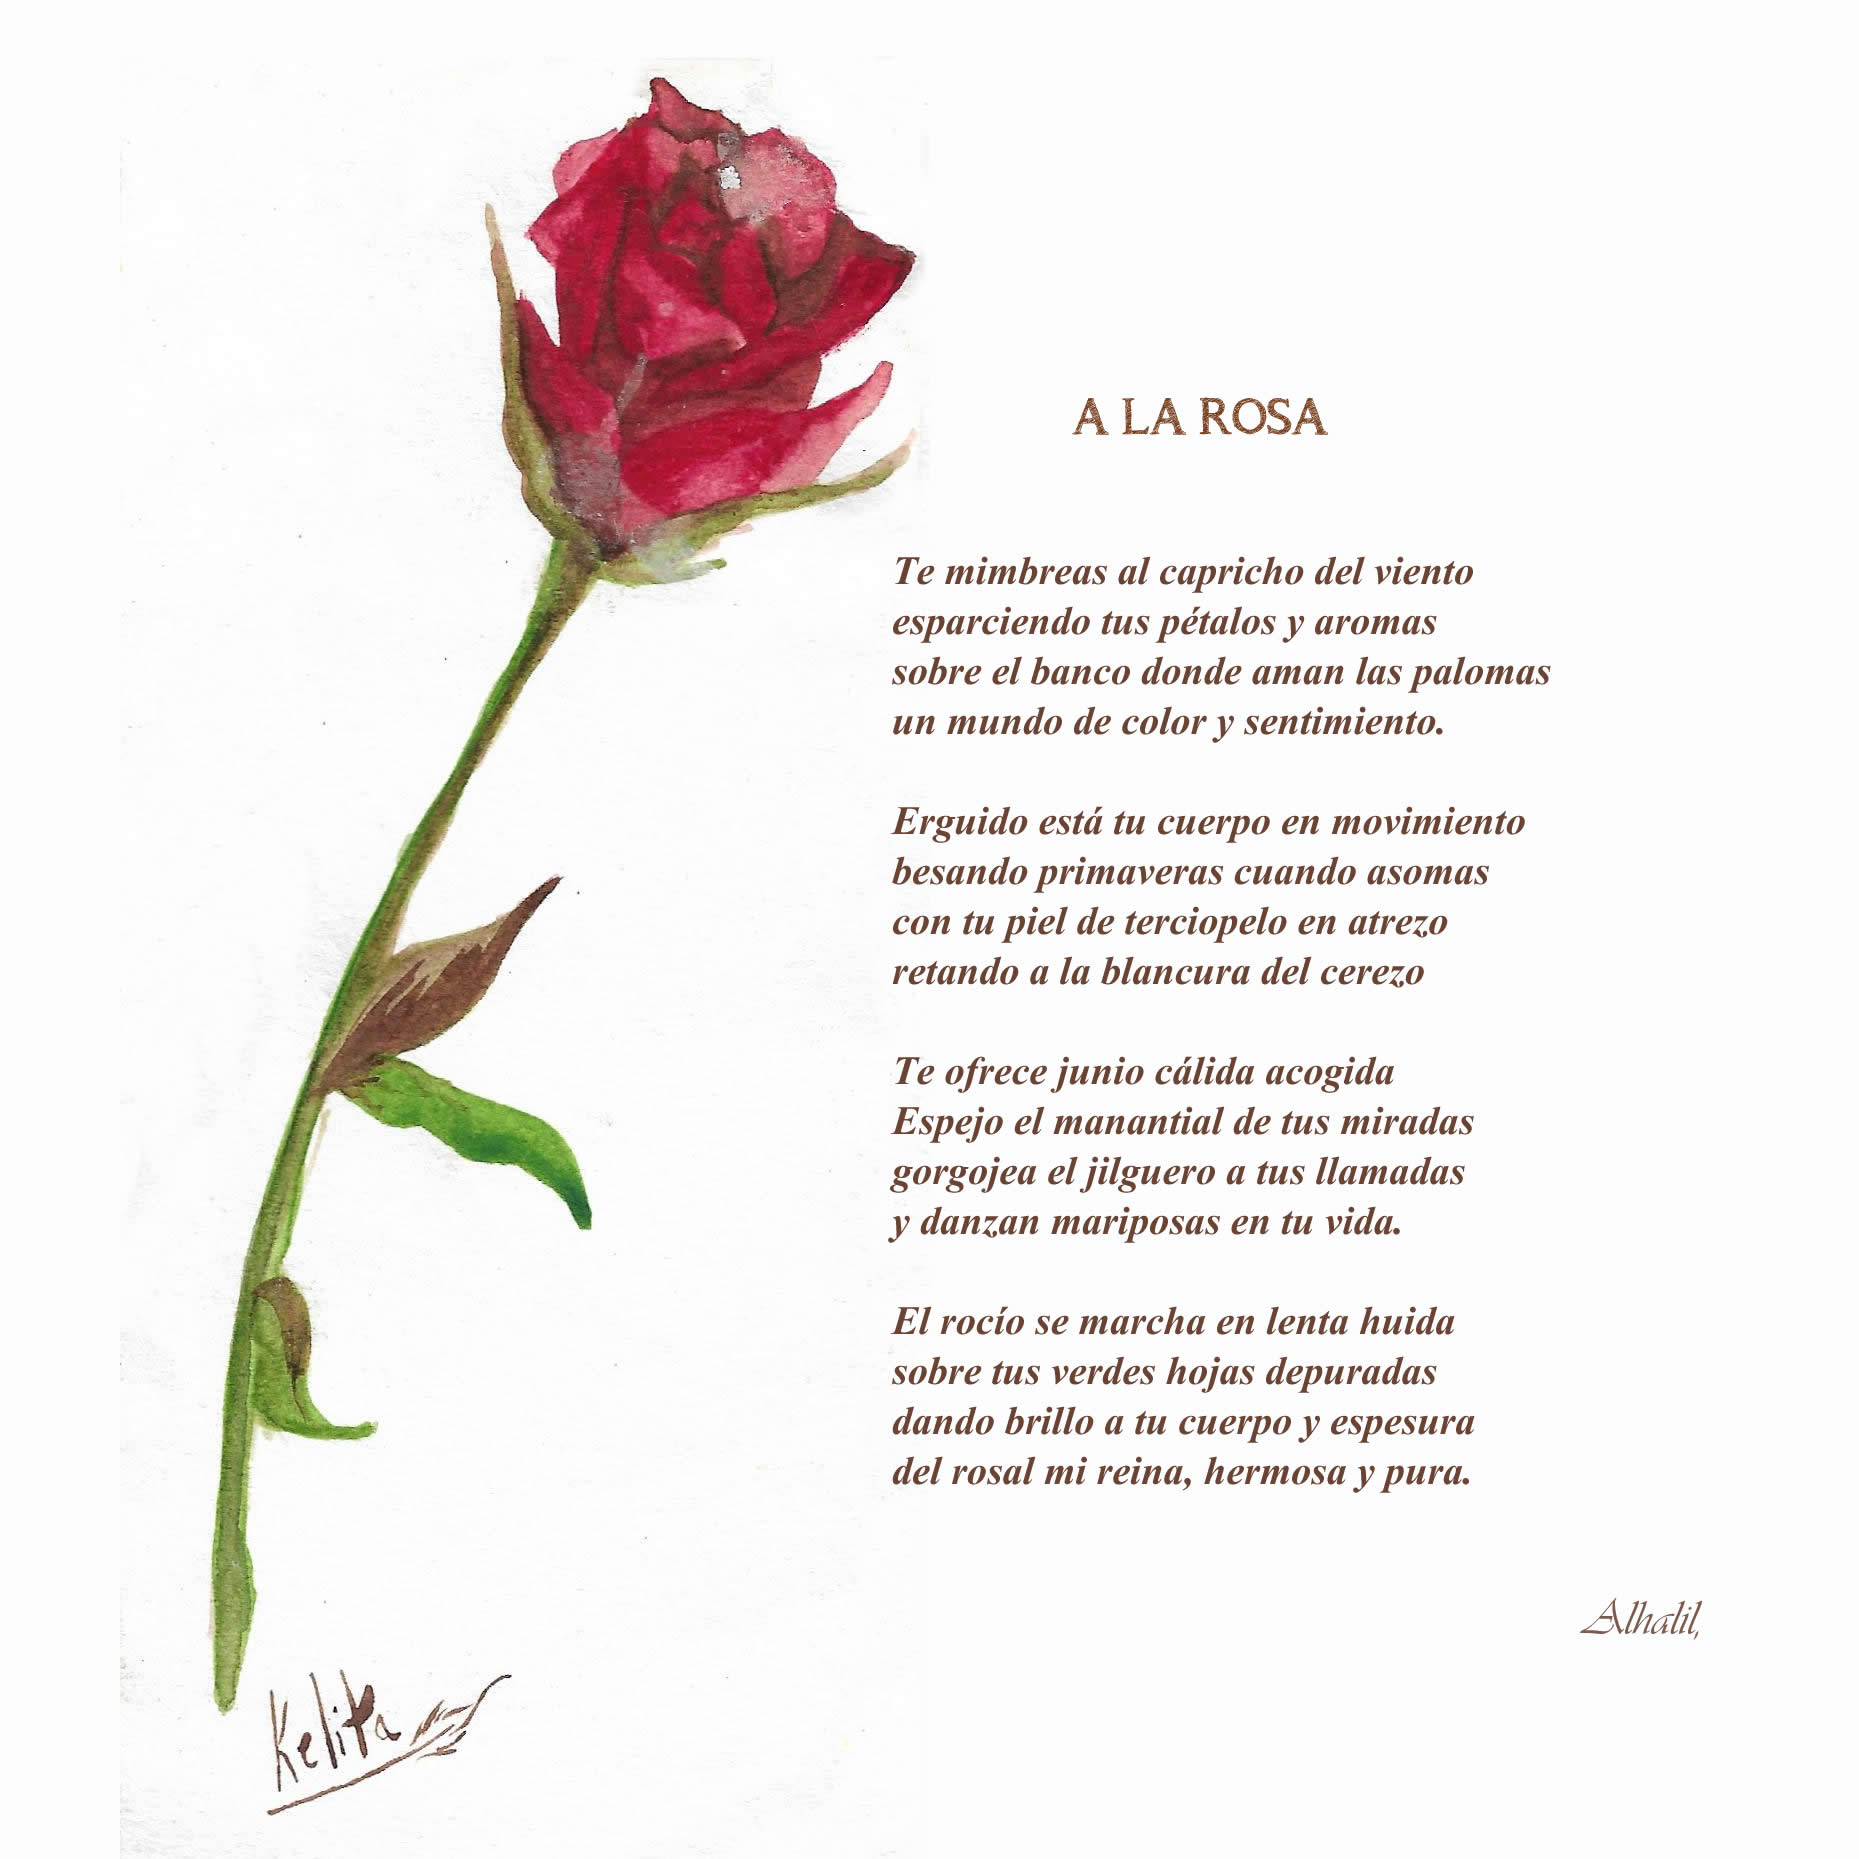 La dulce rima de la rosa: Un tributo poético a la belleza floral